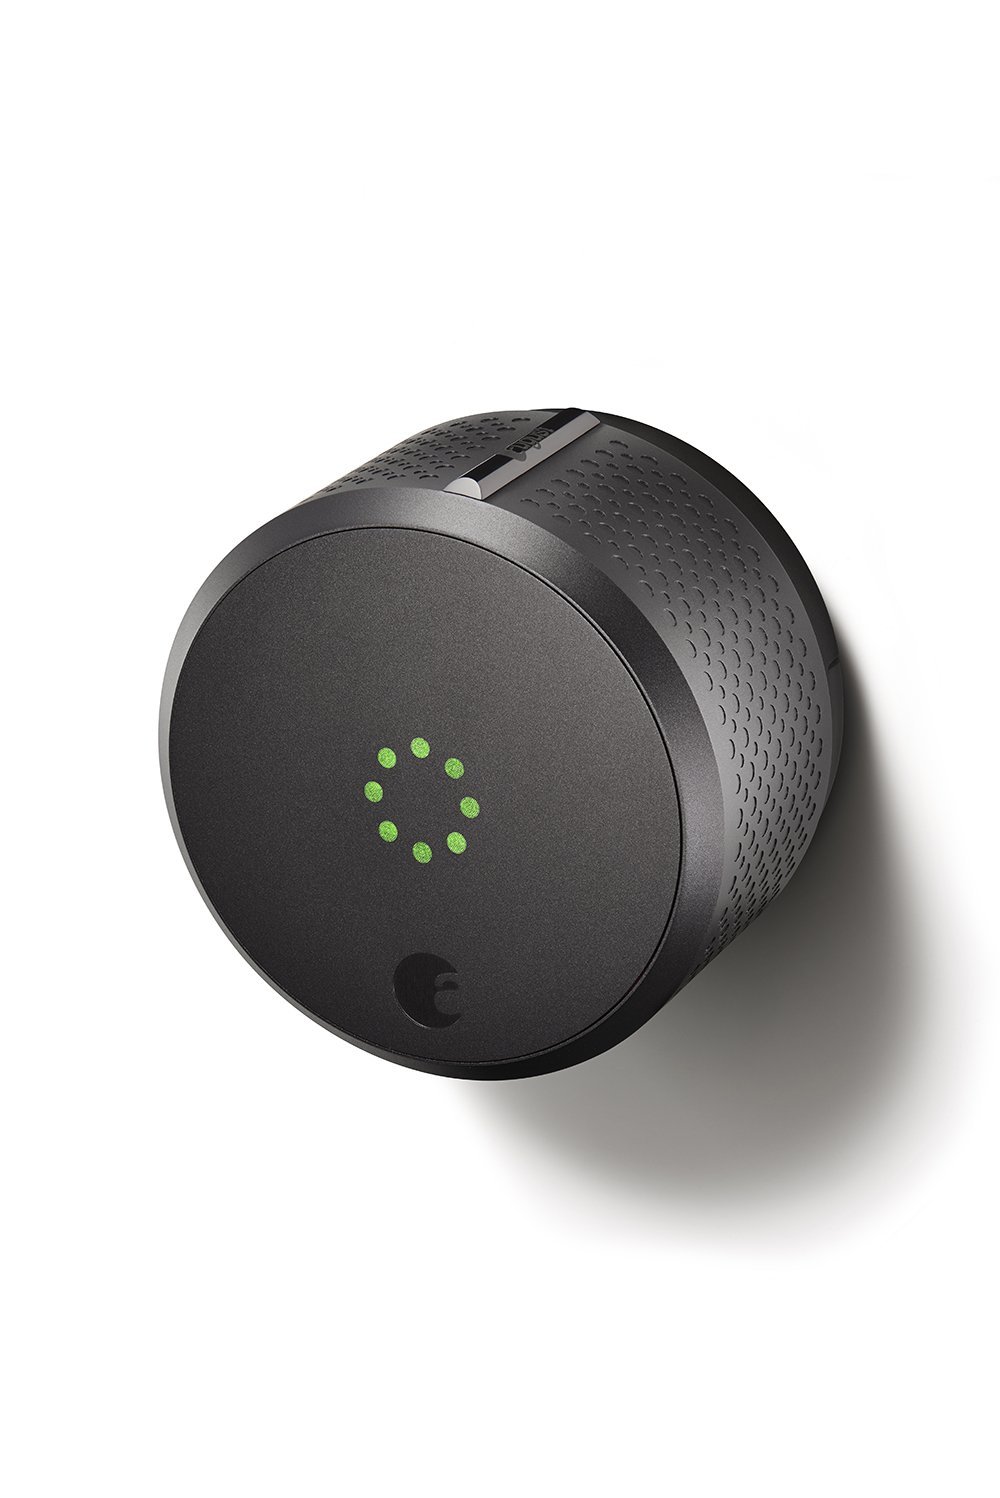 August Home Smart Lock 2nd Generation - Dark Gray, Works with Alexa (ASL-02) 2